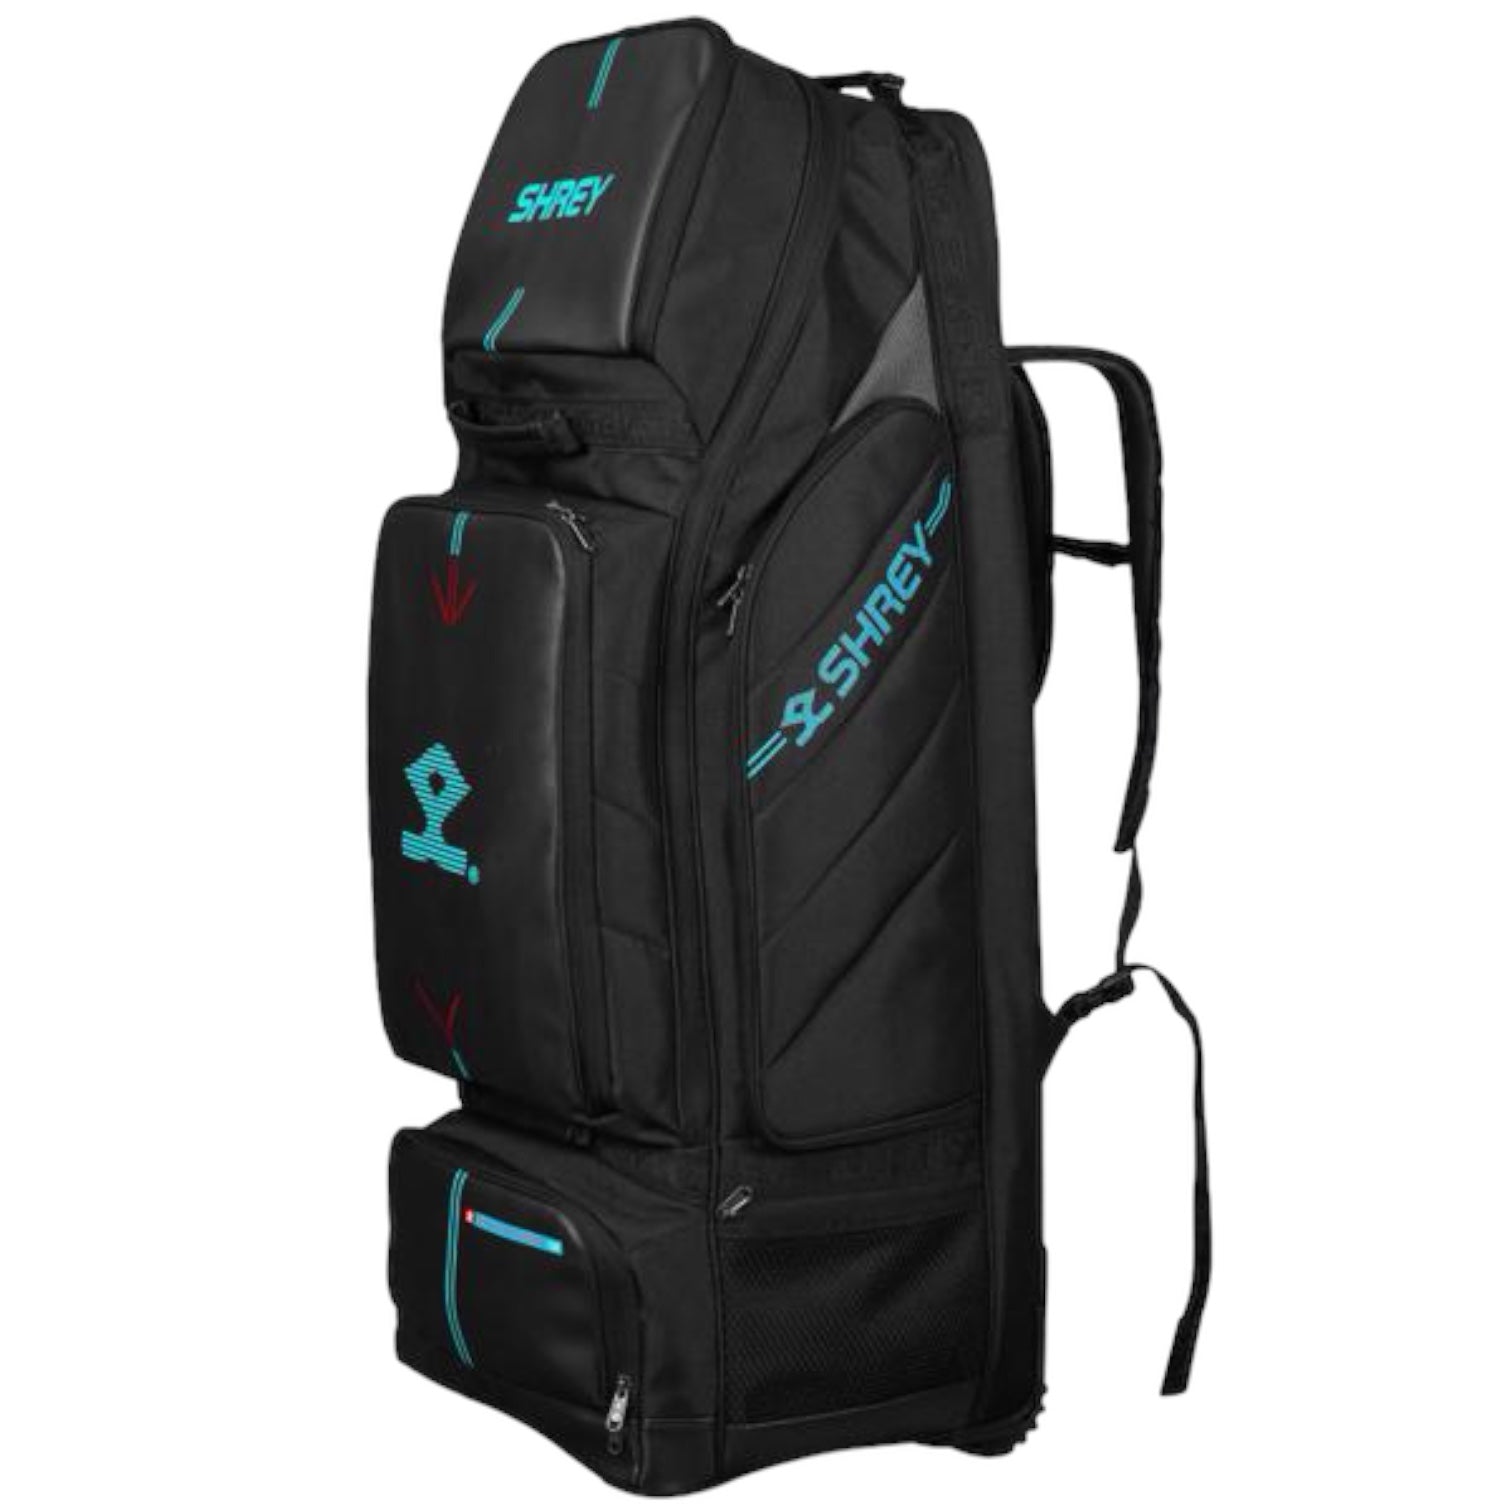 Shrey Meta Duffle Wheelie 120 Bag - The Cricket Store